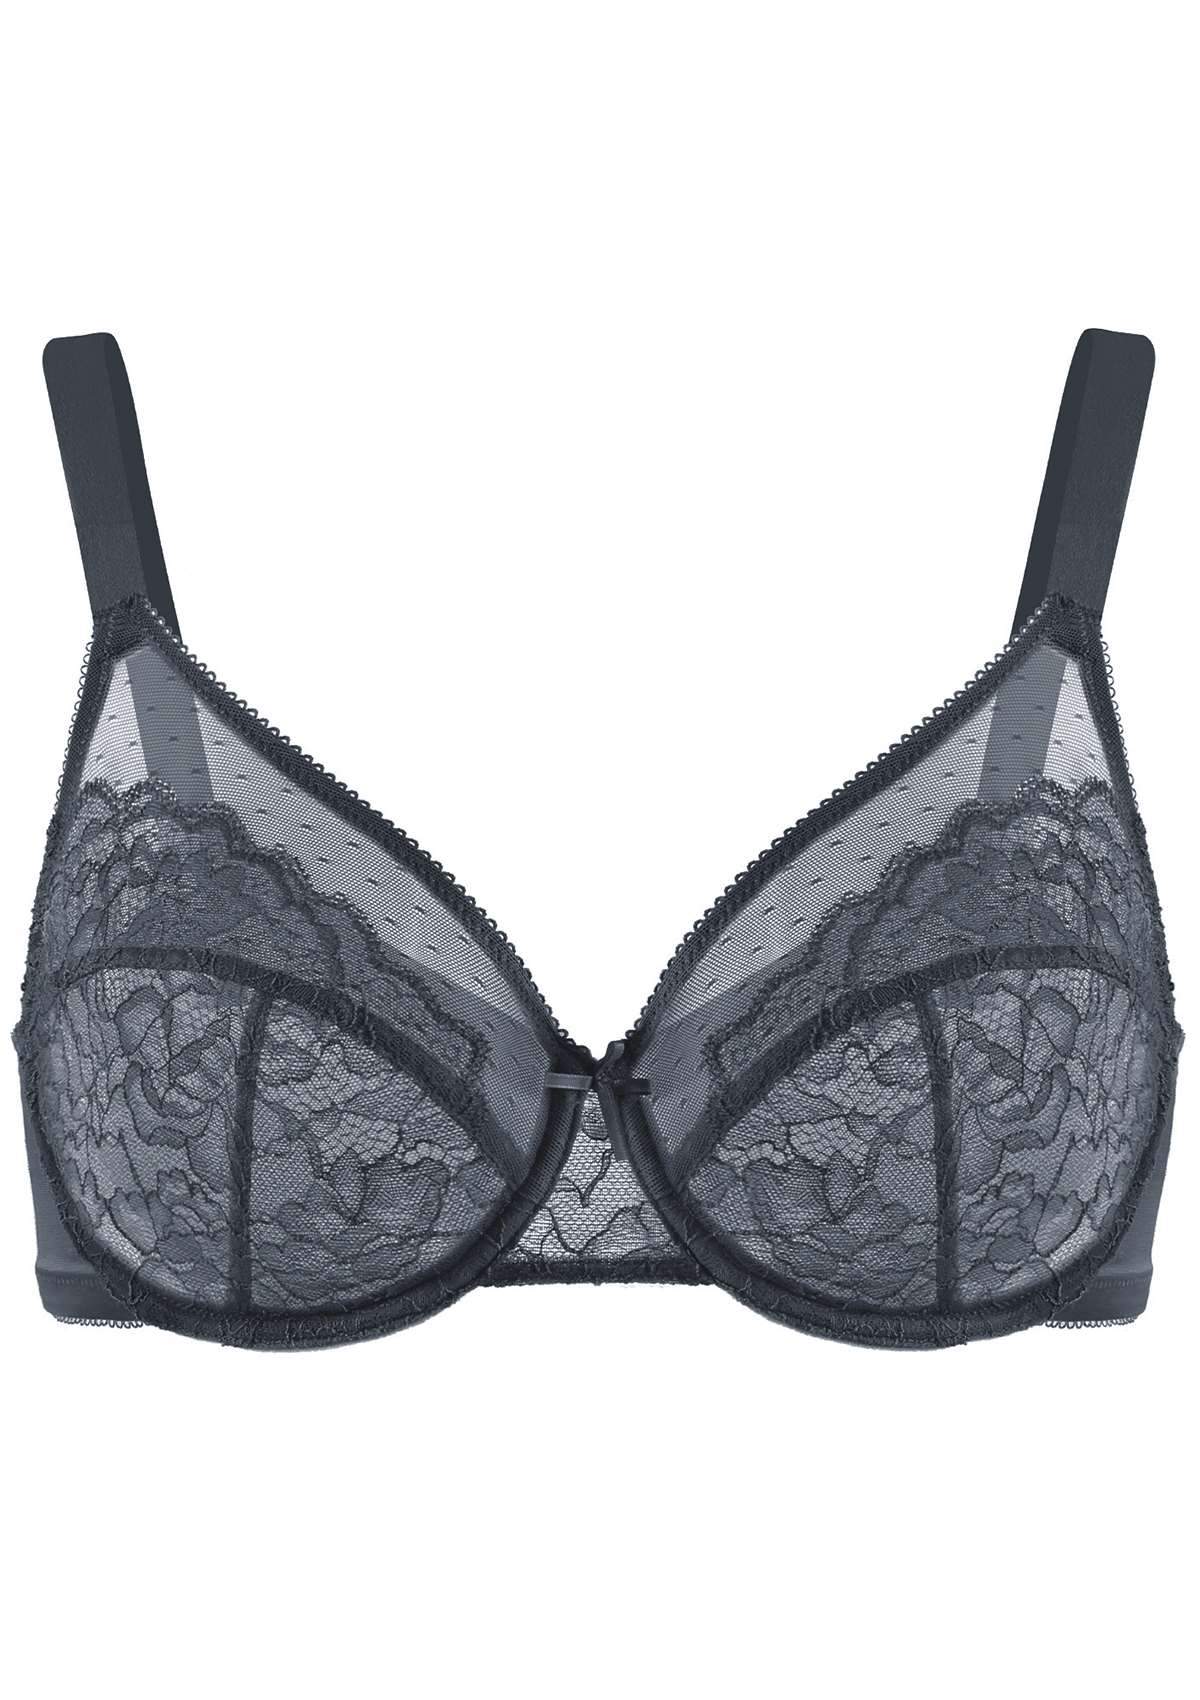 HSIA Enchante Matching Bra And Underwear Sets: Uplift Big Boobs Bra - Dark Gray / 34 / D